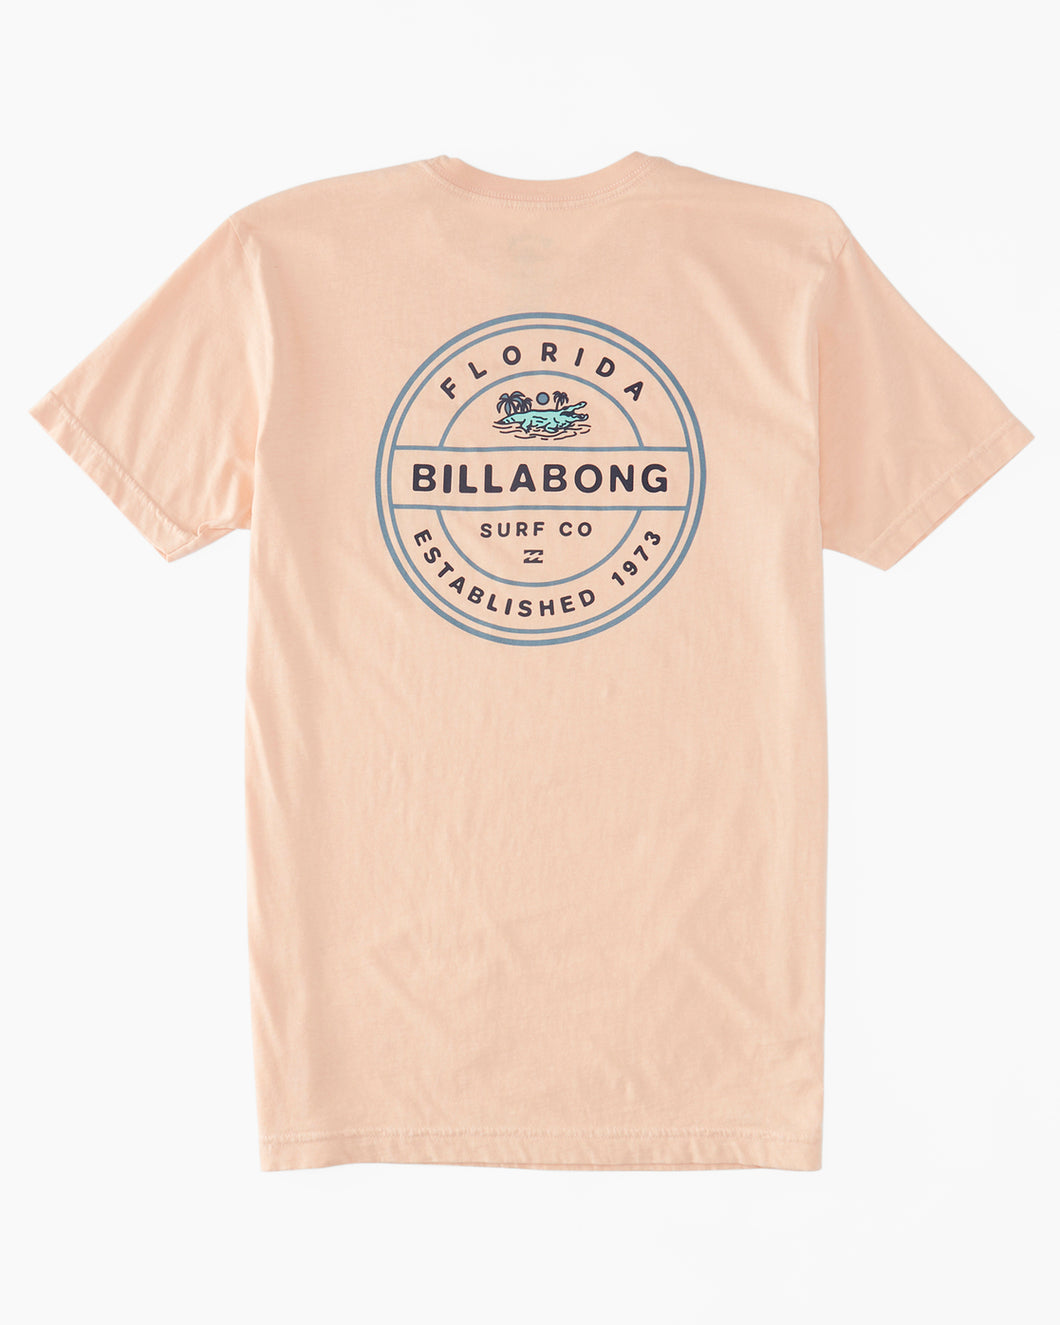 Billabong Men's Gator Rotor Short Sleeve T-Shirt